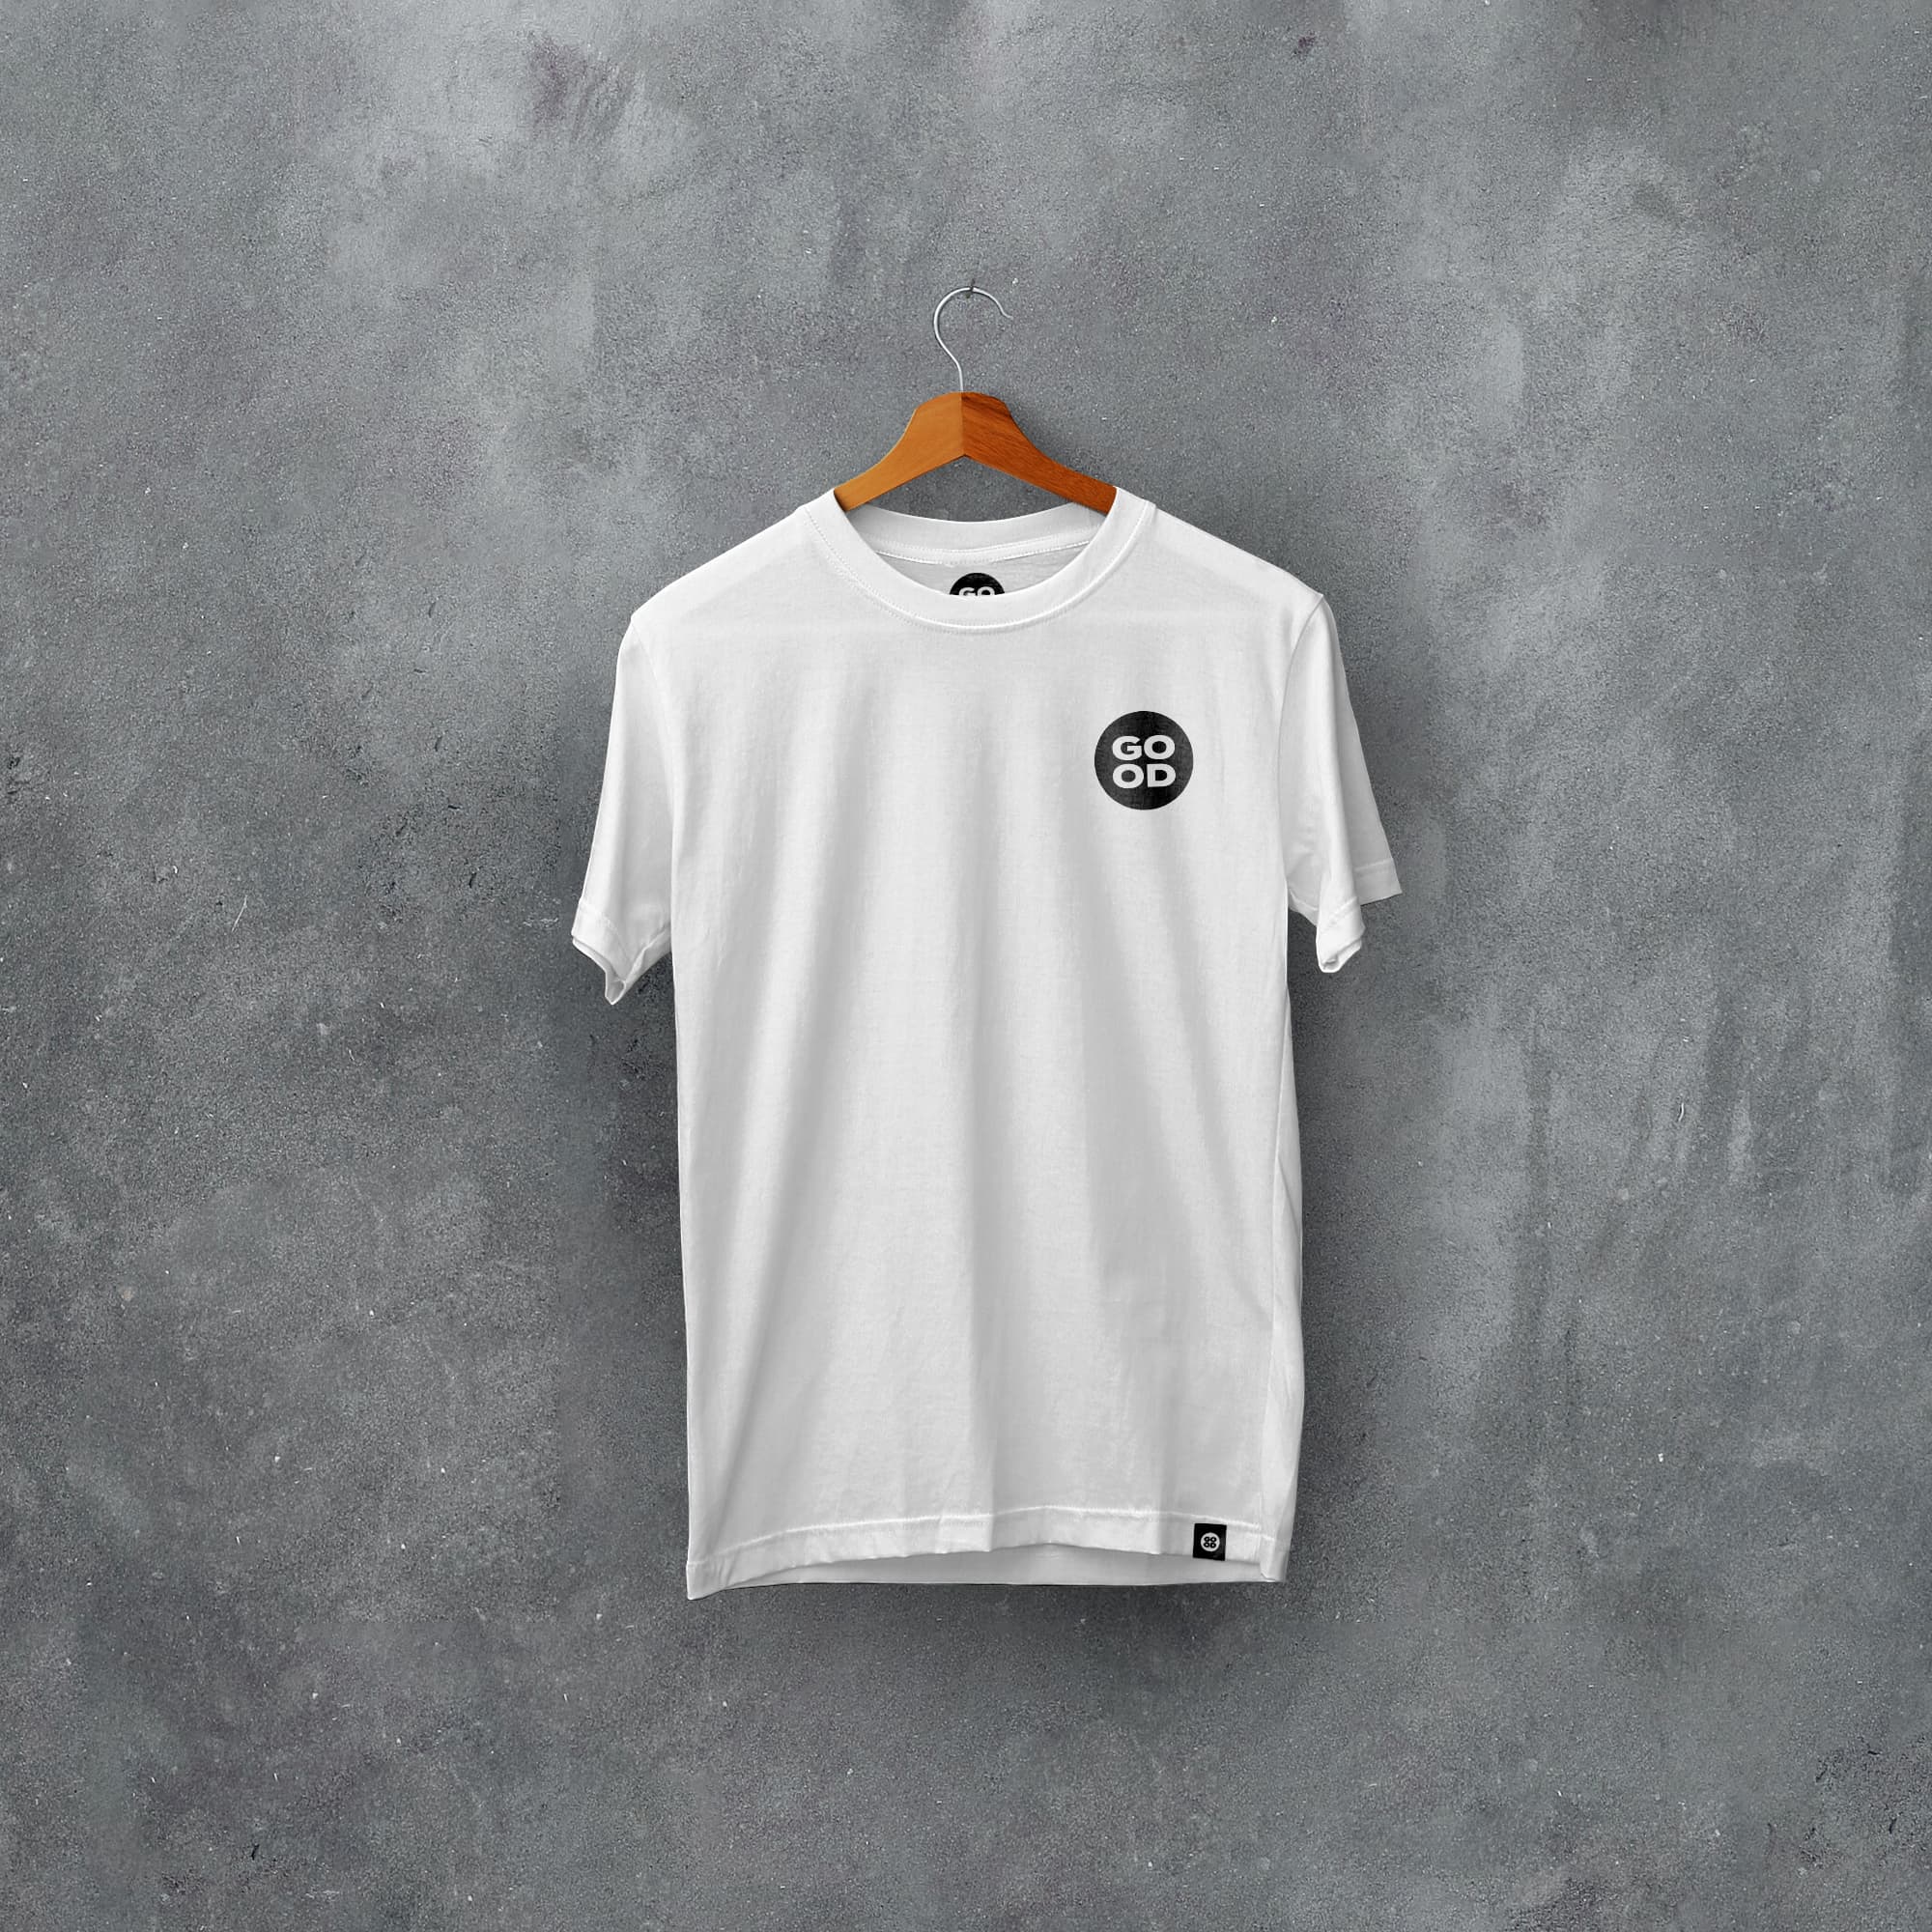 Dundee Classic Kits Football T-Shirt